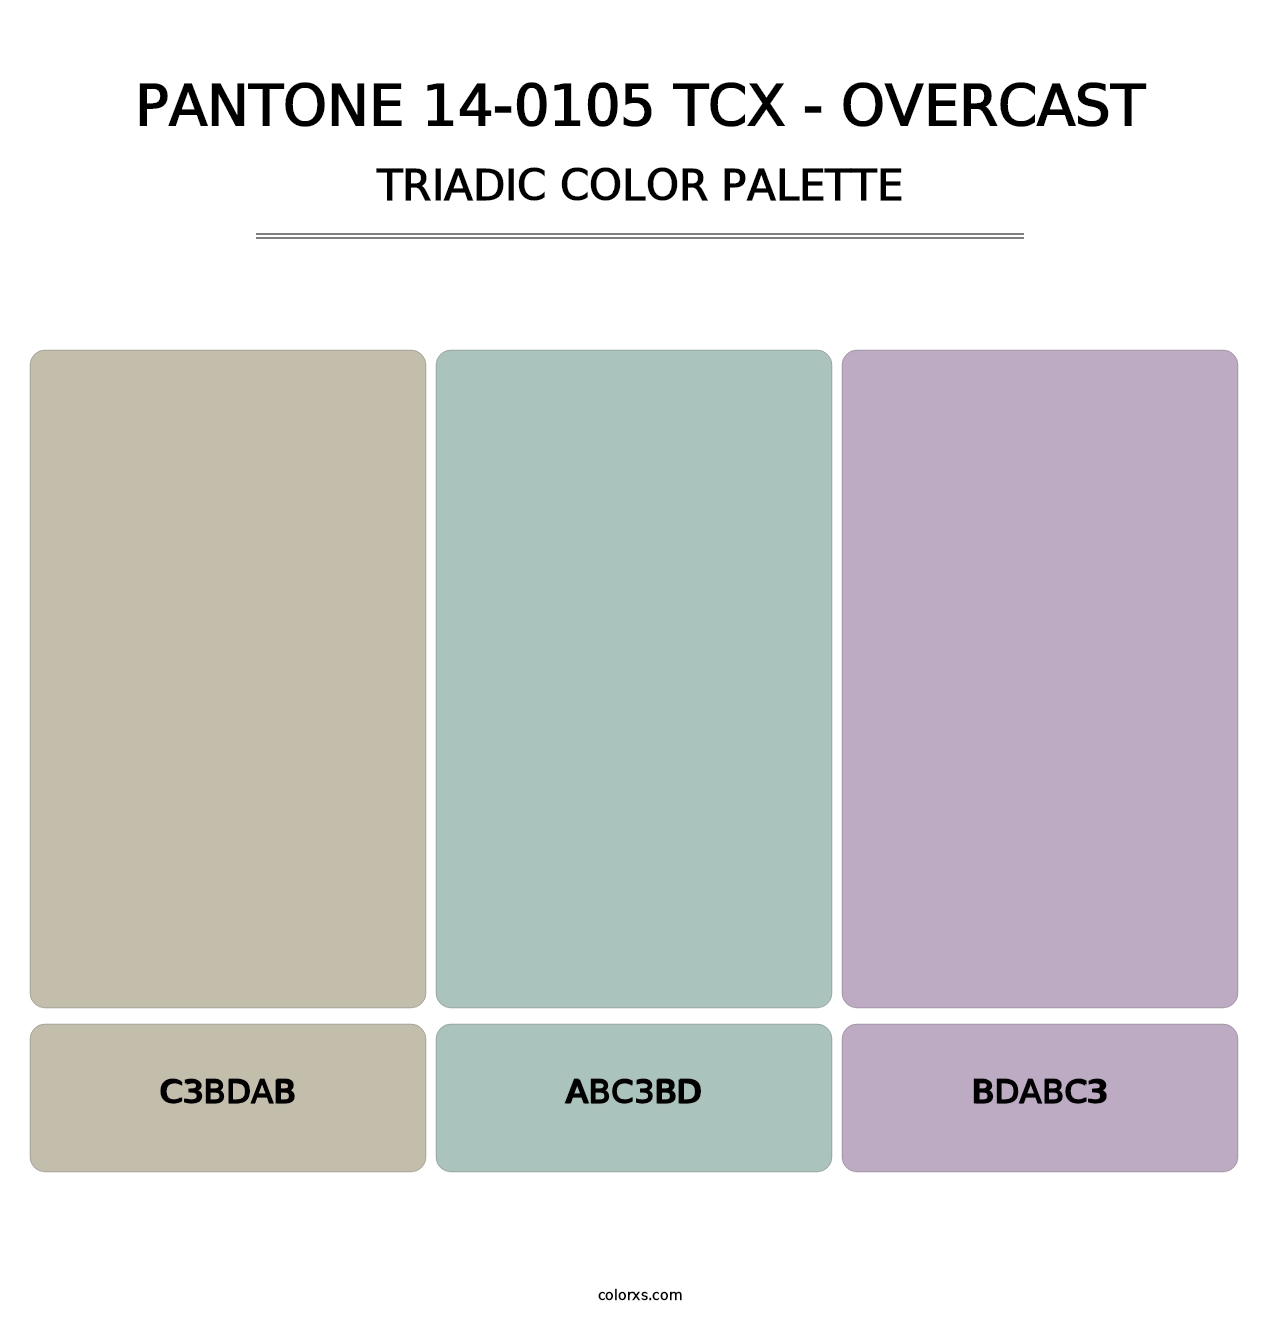 PANTONE 14-0105 TCX - Overcast - Triadic Color Palette